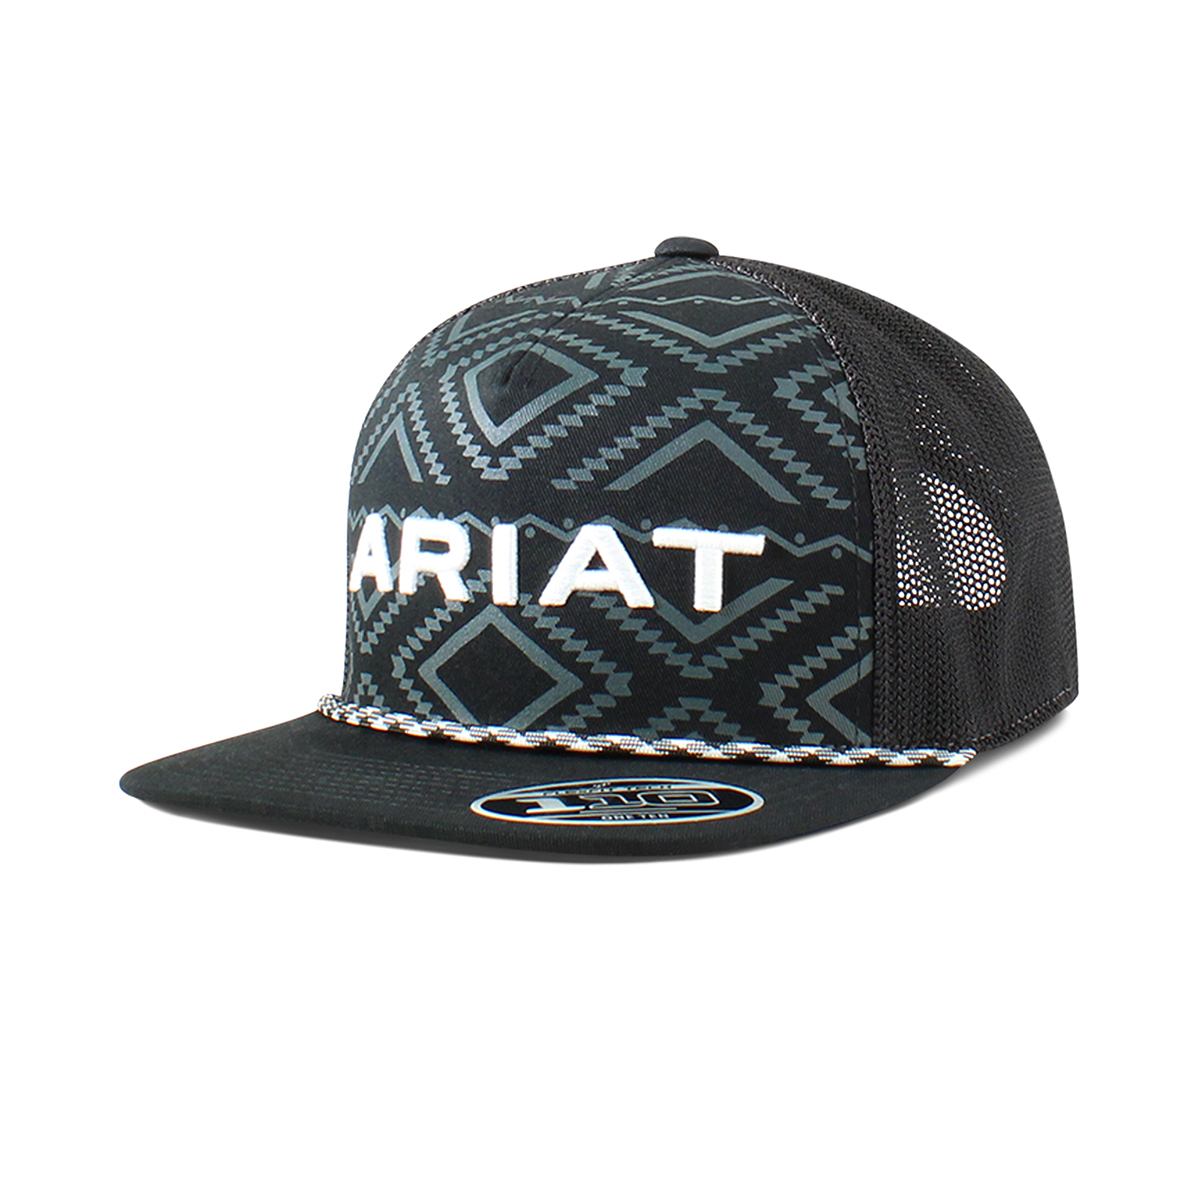 Ariat Mens Flexfit 110 Snapback Cap - Rope Black